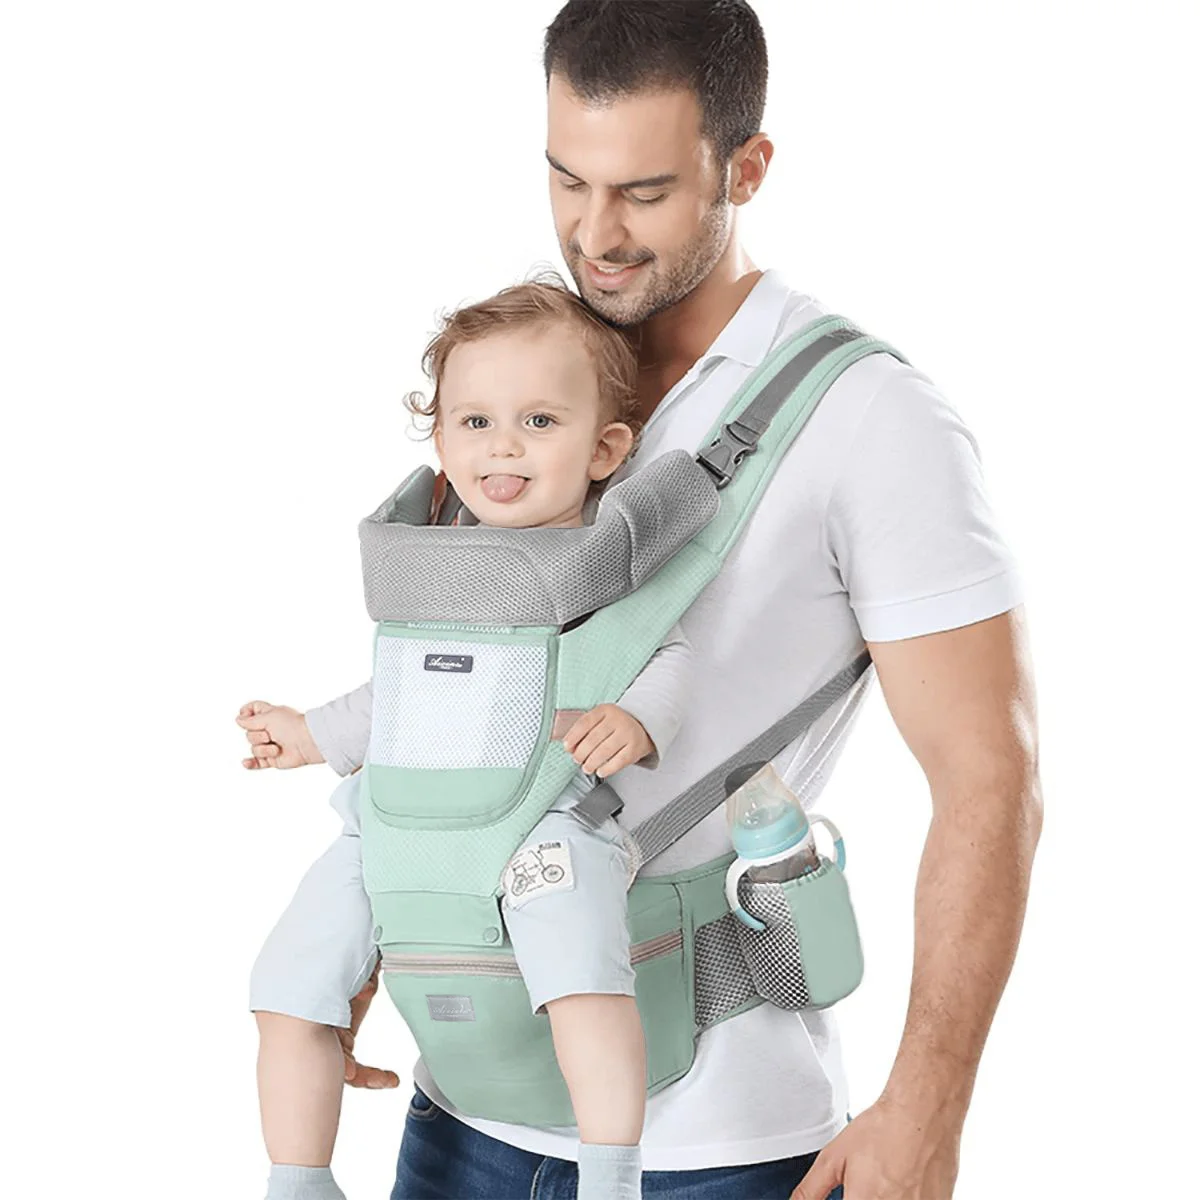 Детска переноска от висококачествен чист памук - удобно носене на вашето бебе 0-36 месеца!4